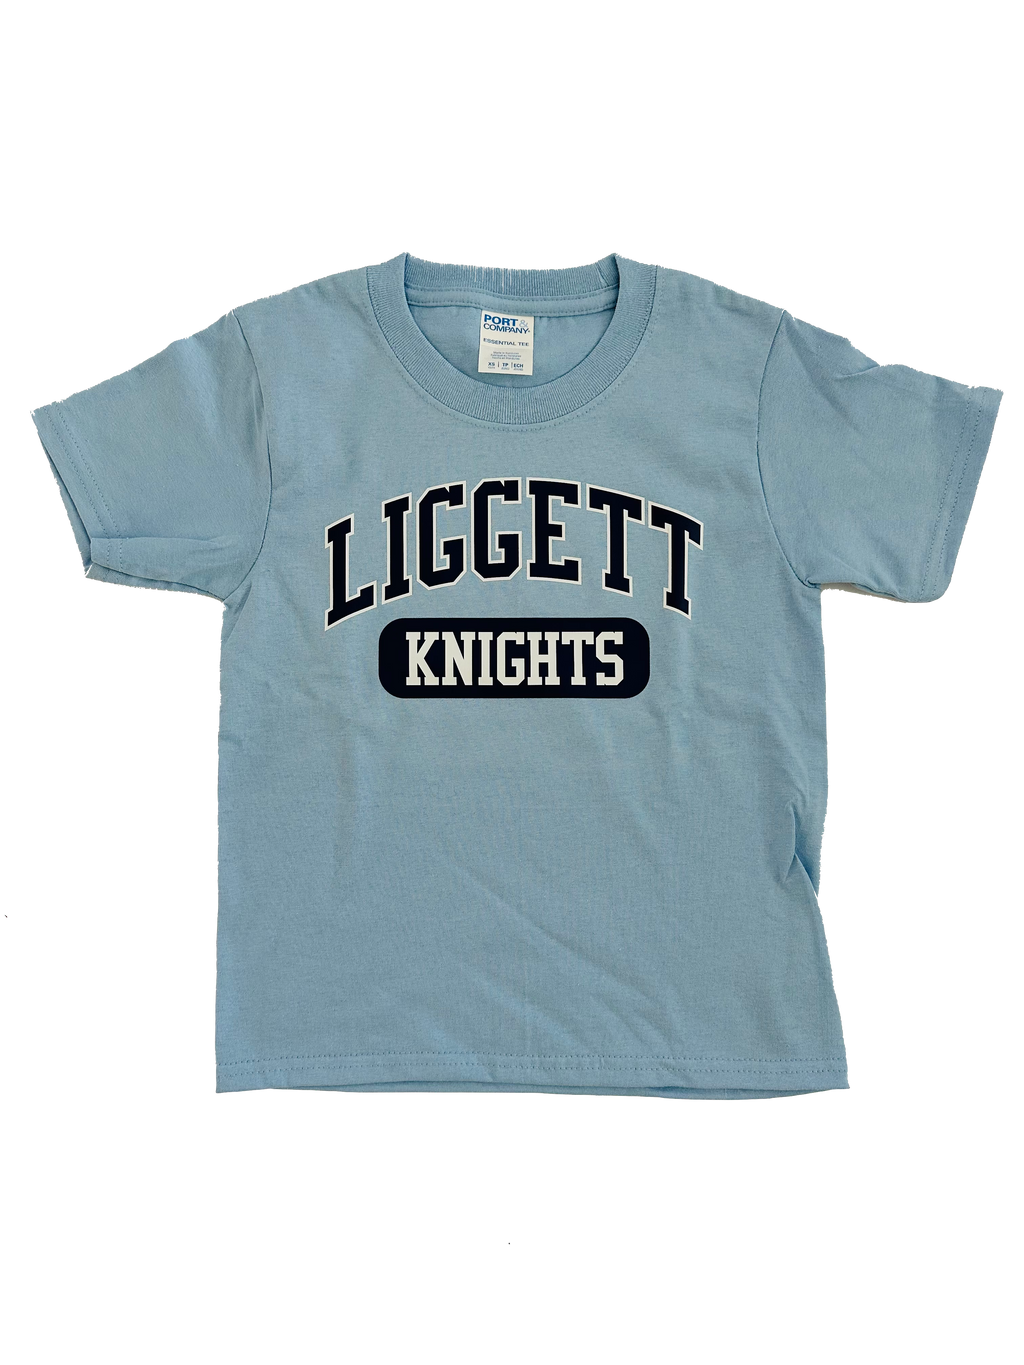 NEW Youth Light Blue Liggett Knights SS Tee